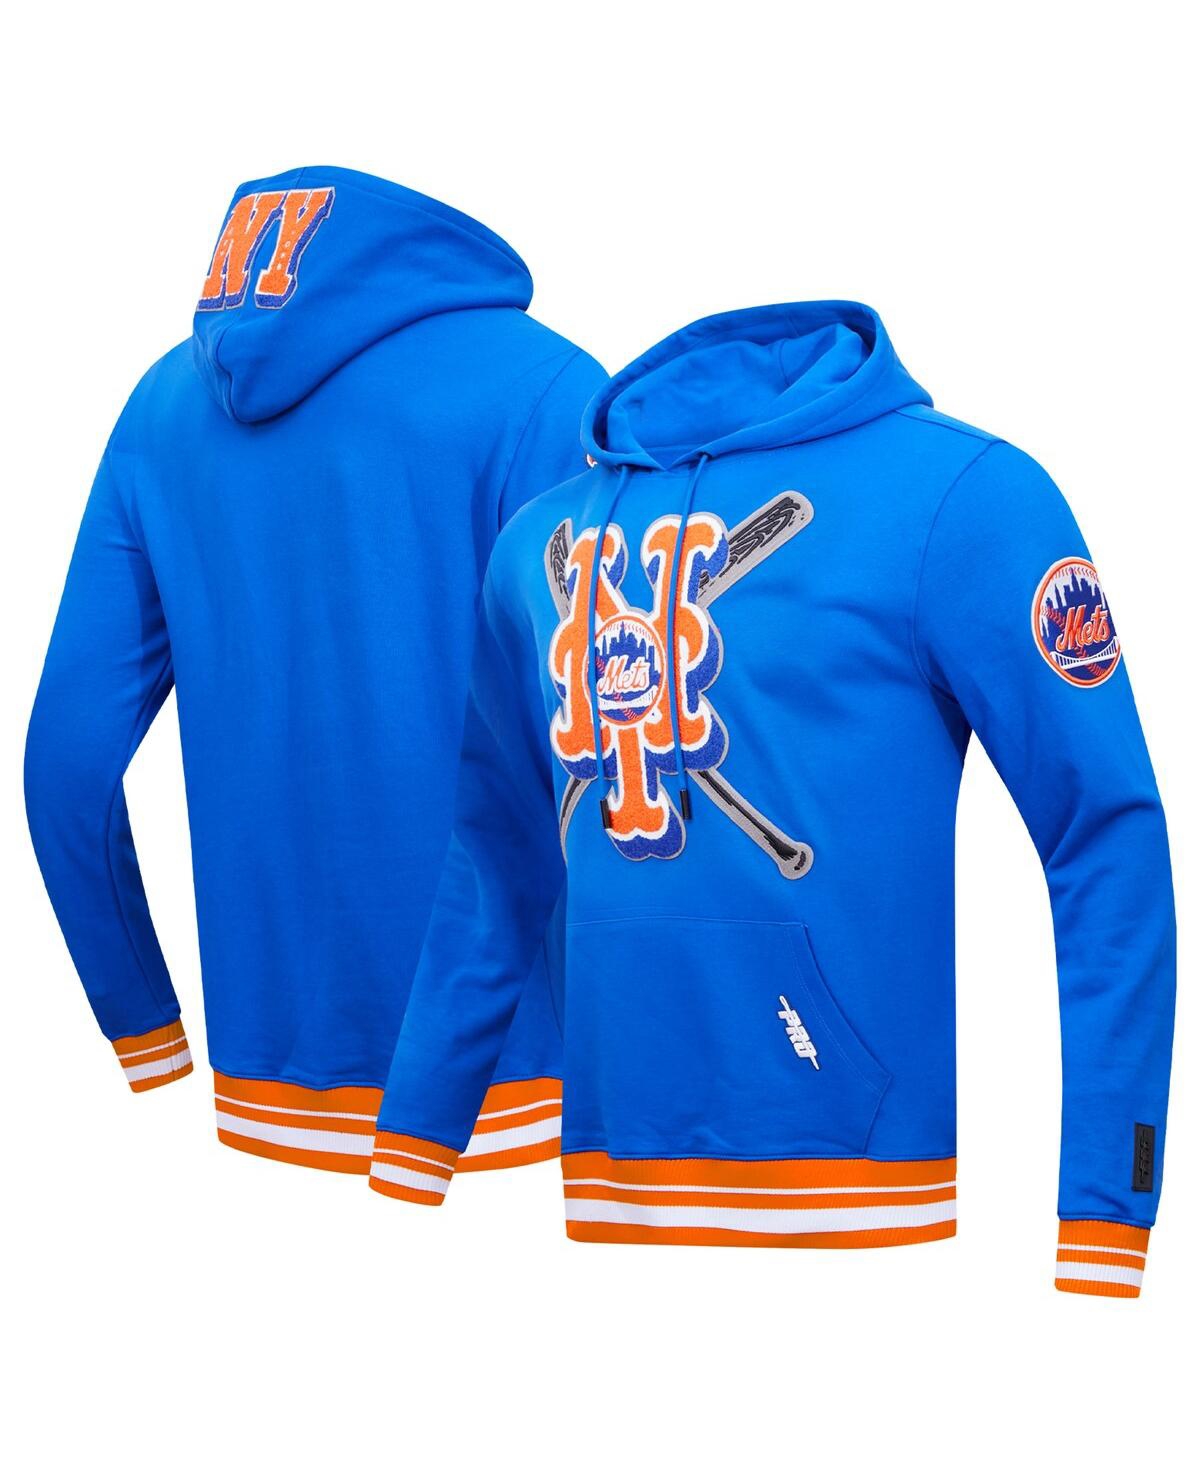 Shop Pro Standard Men's  Royal New York Mets Mash Up Logo Pullover Hoodie